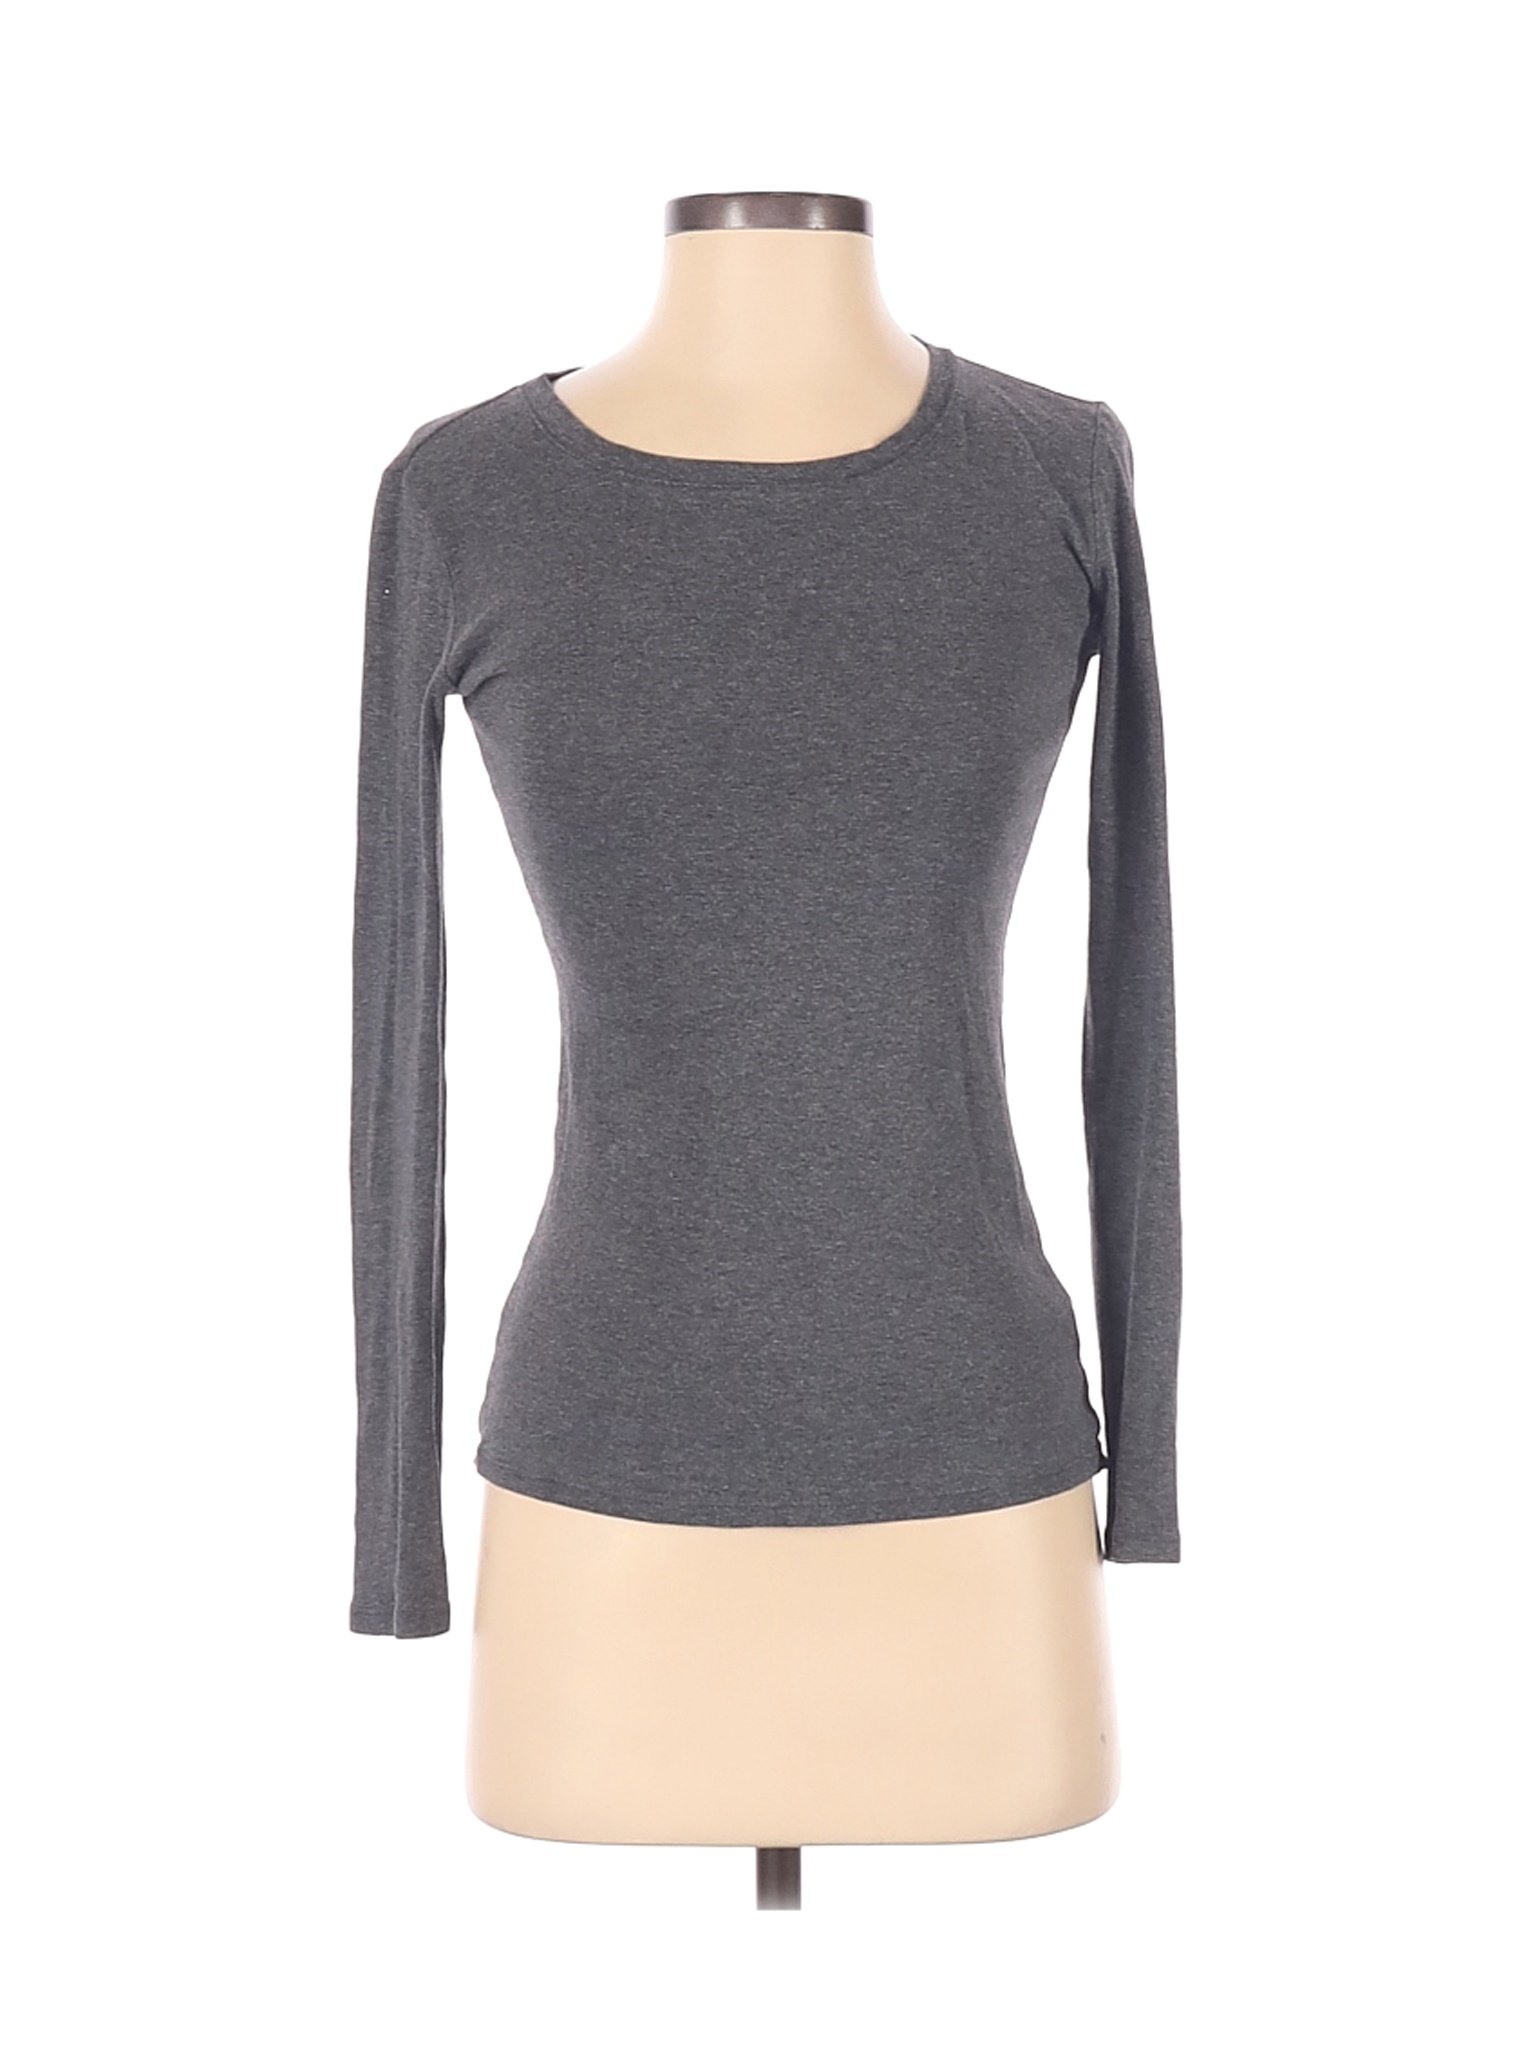 Gap Women Gray Long Sleeve T-Shirt XS | eBay